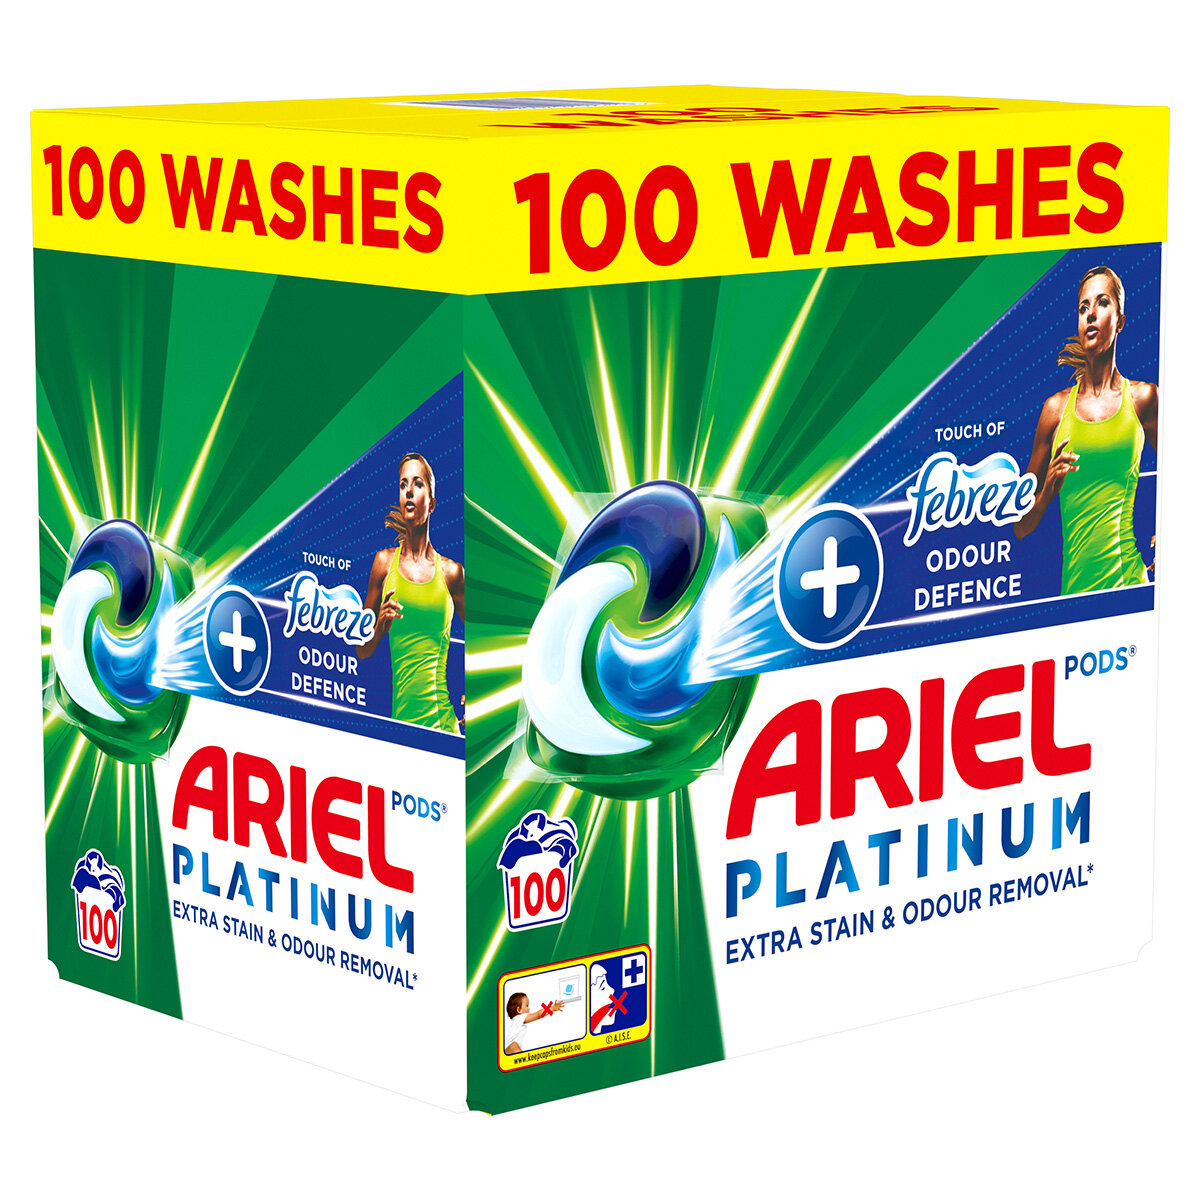 Ariel Platinum PODS® + Touch of Lenor